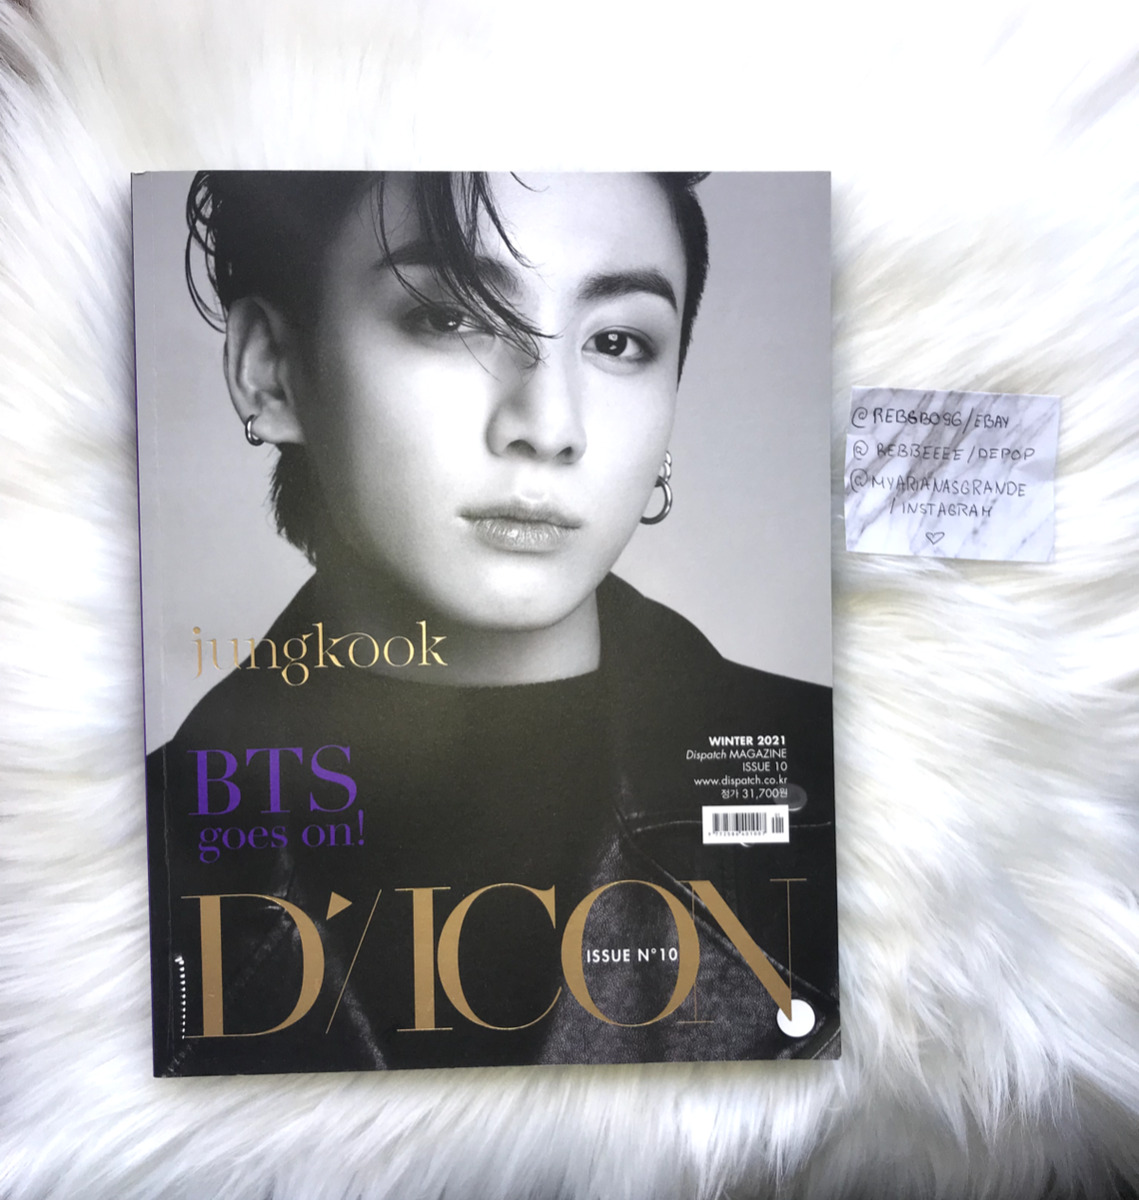 BTS Jungkook in Louis Vuitton, - Men's Journal Online